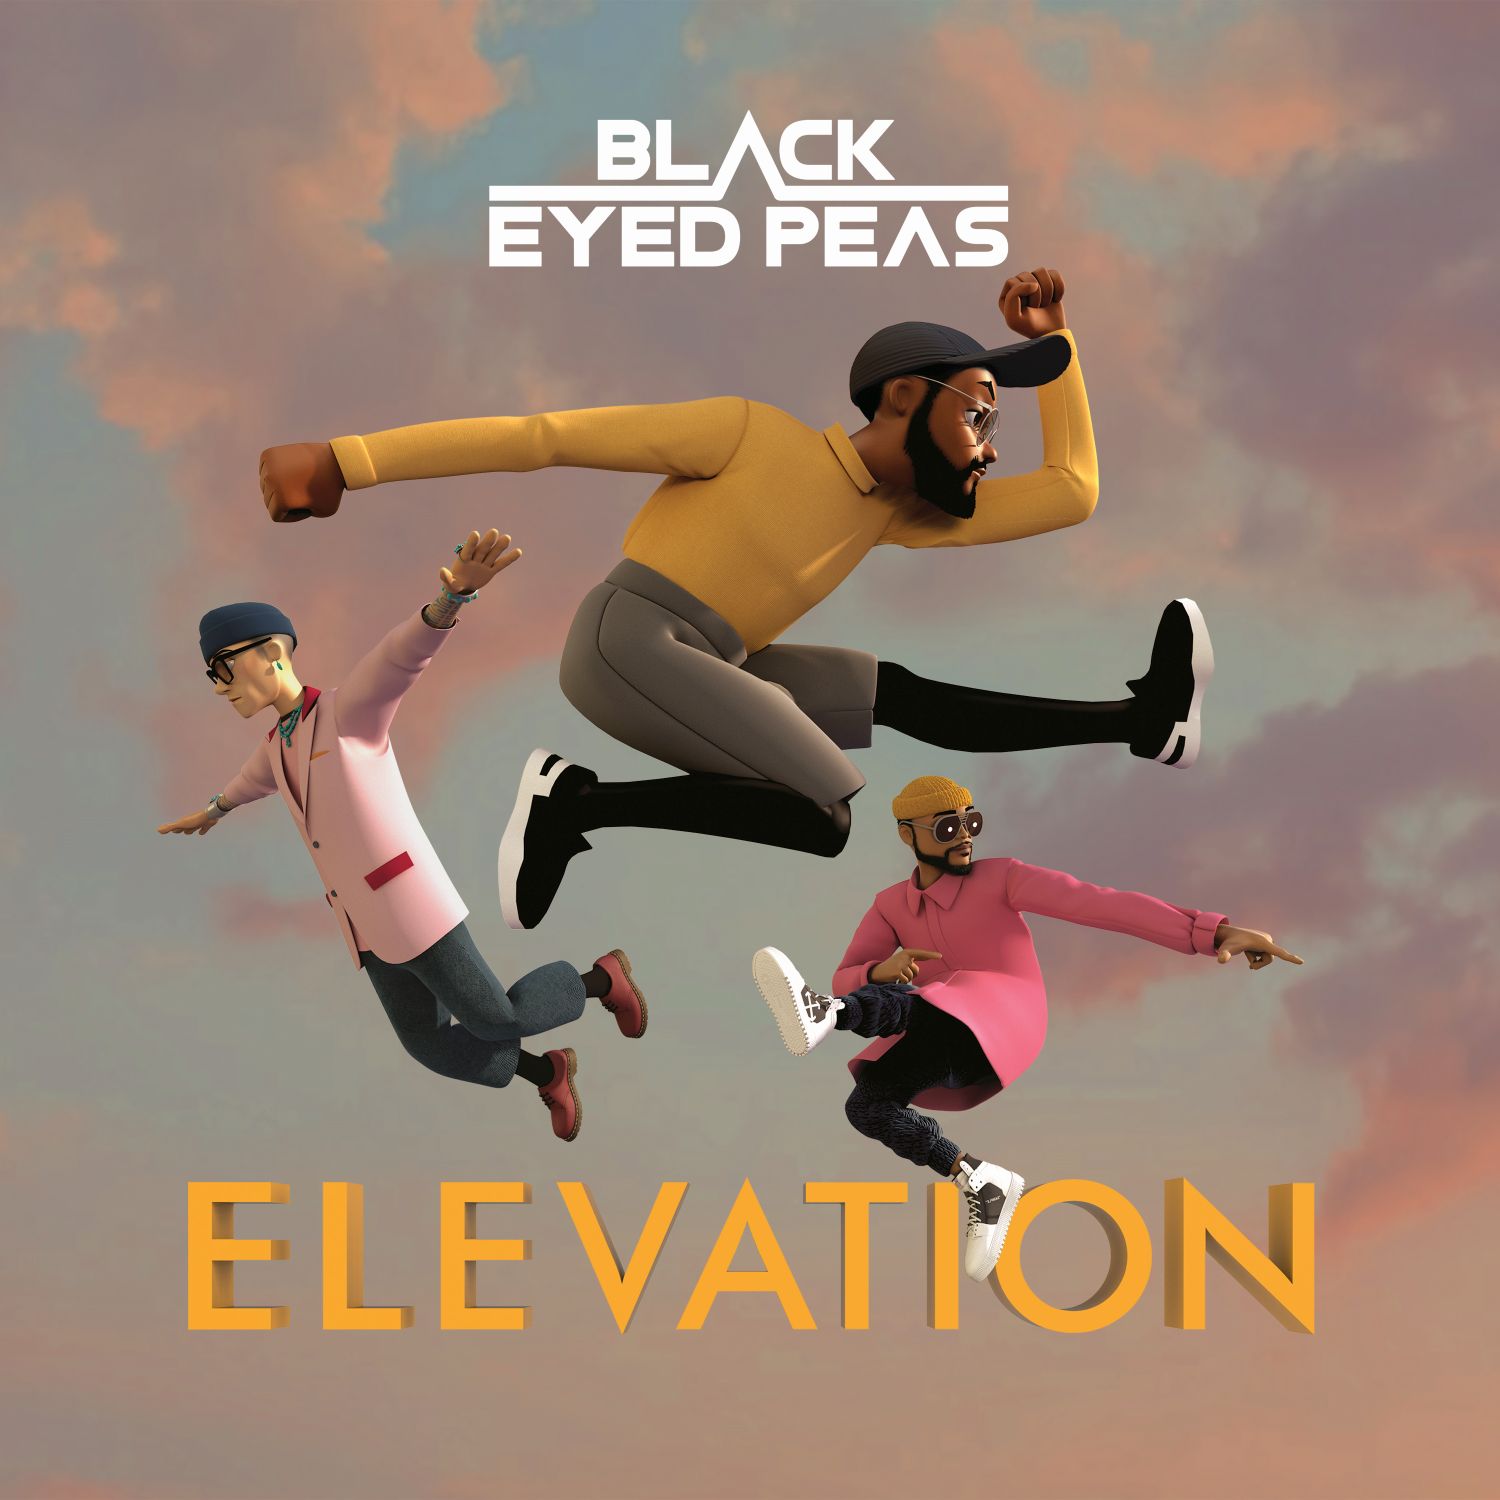 Black Eyed Peas nuovo album e tour - immagini